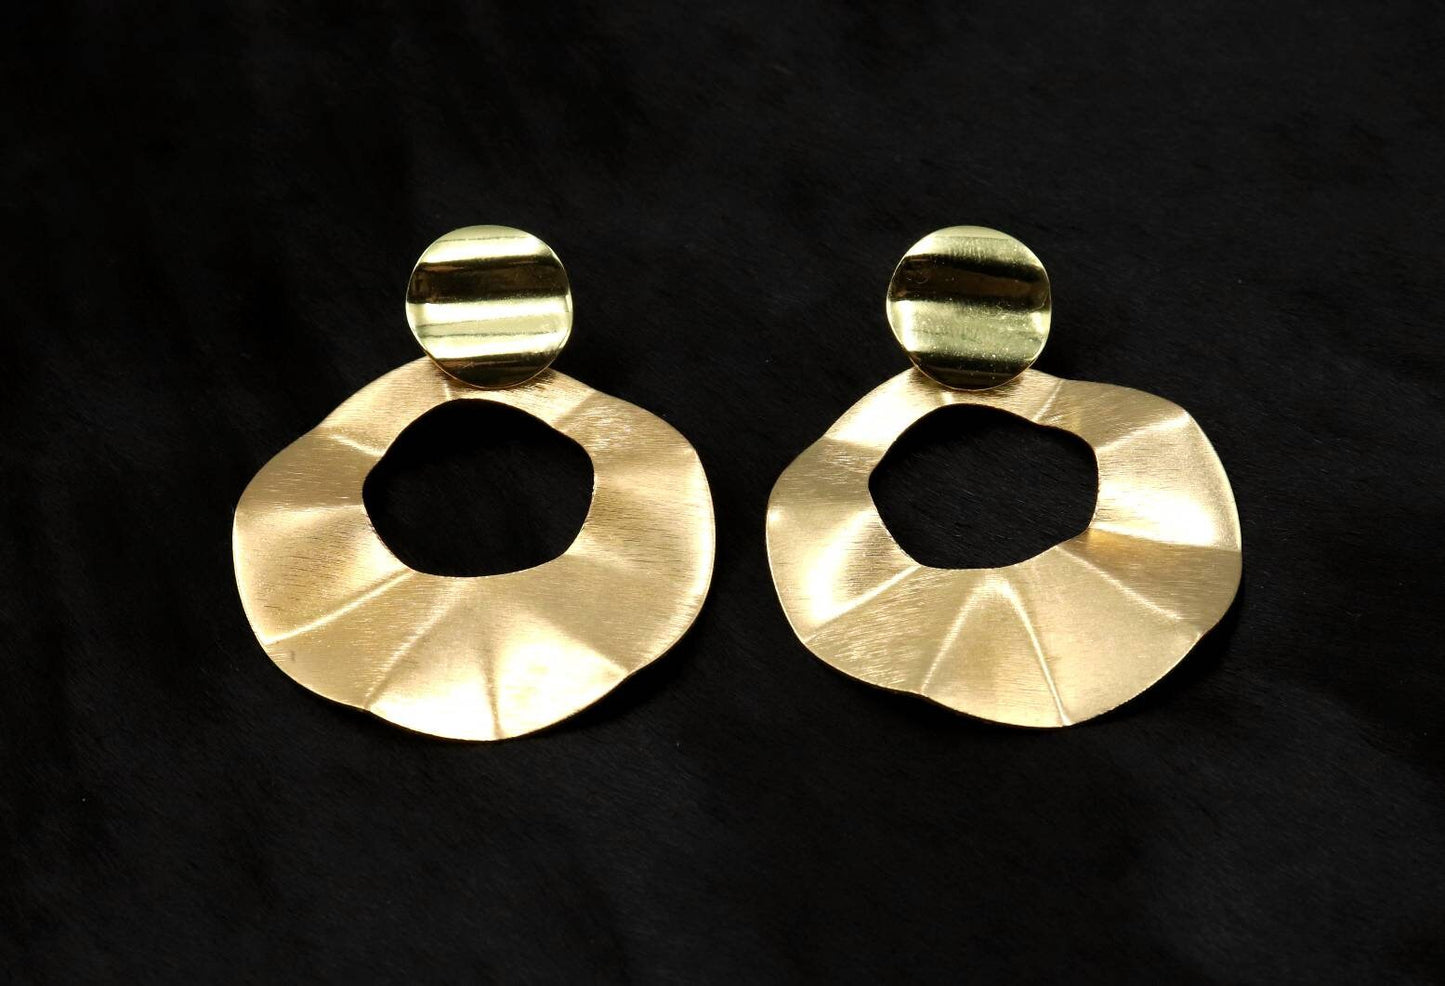 BIZU Metallic earrings